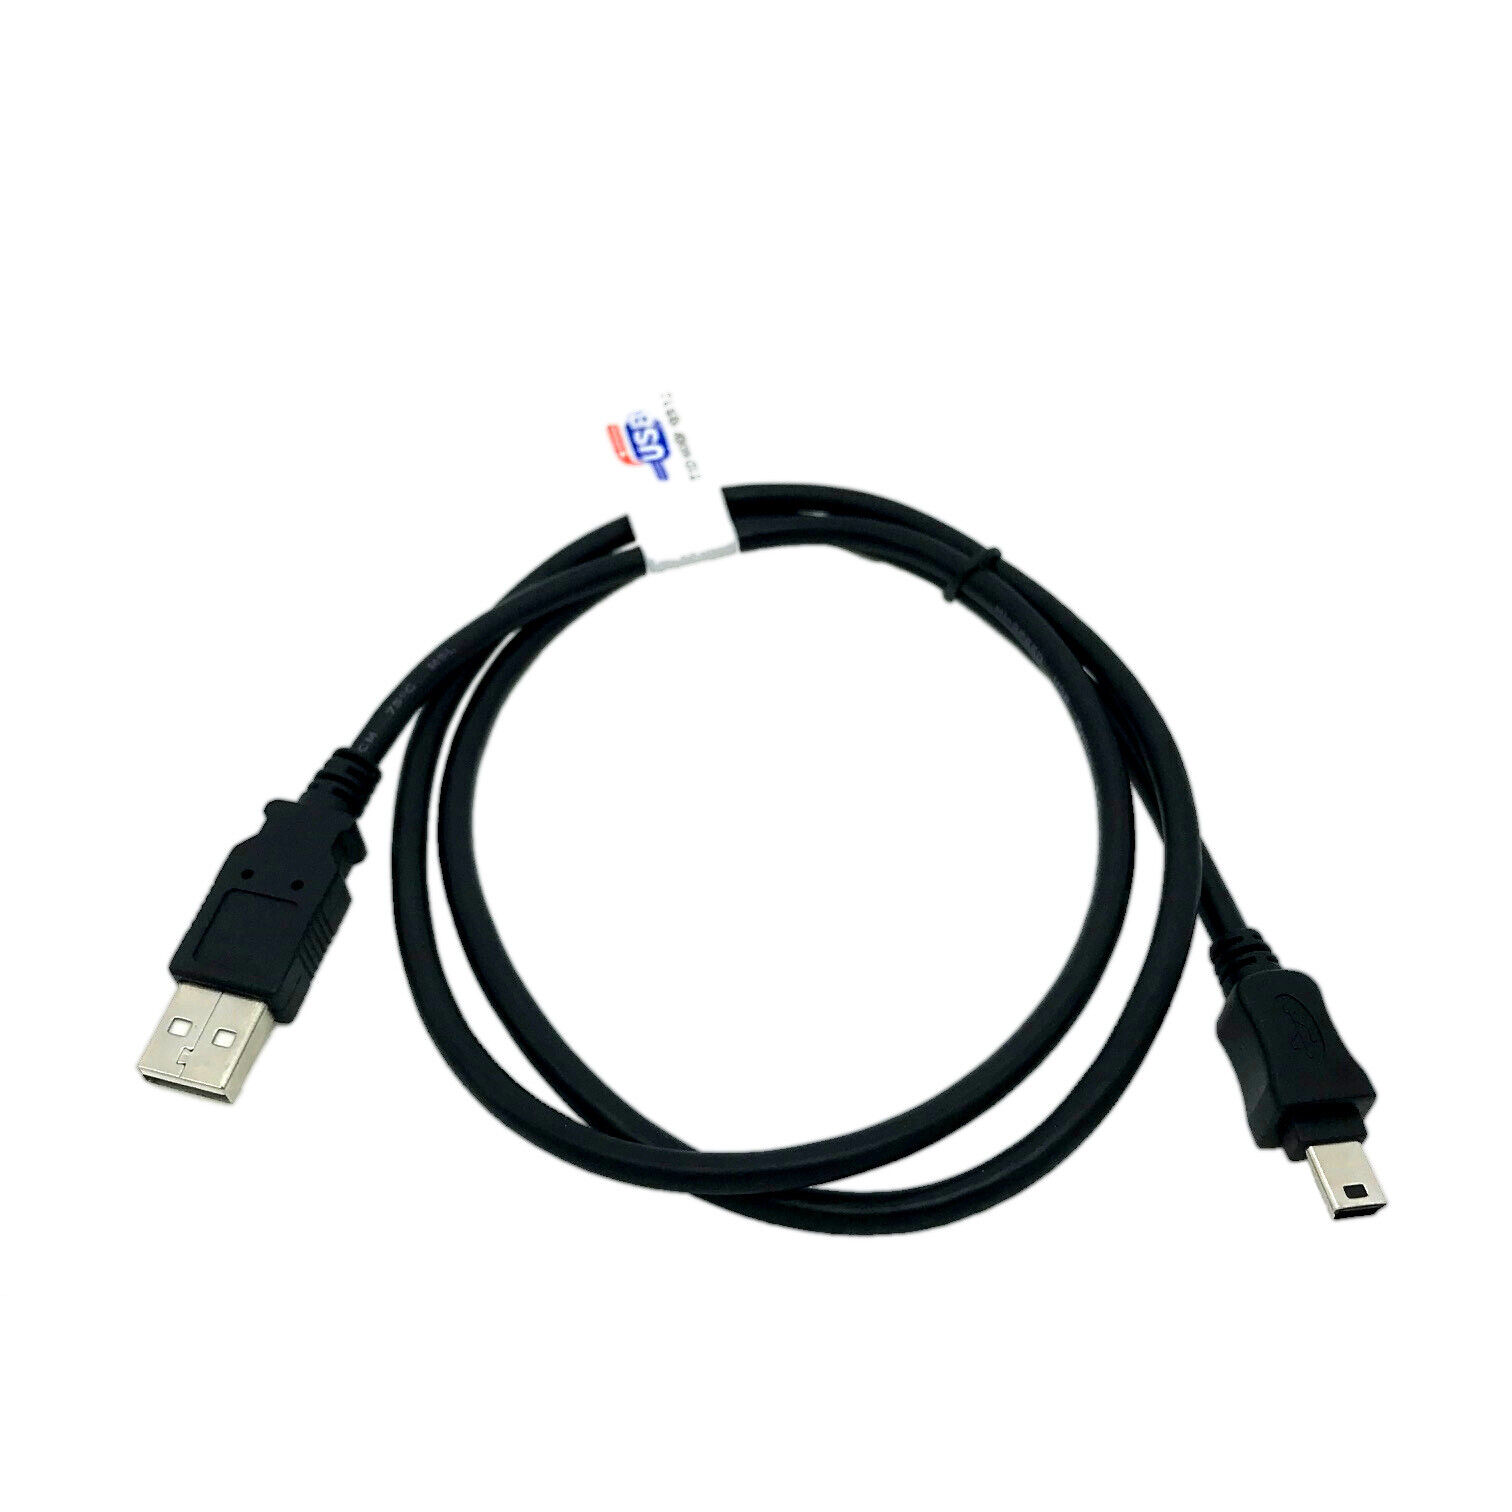 3 Ft USB Cord Cable for VERBATIM CLON 320GB 80GB 120GB 160GB 250GB 500GB HDD